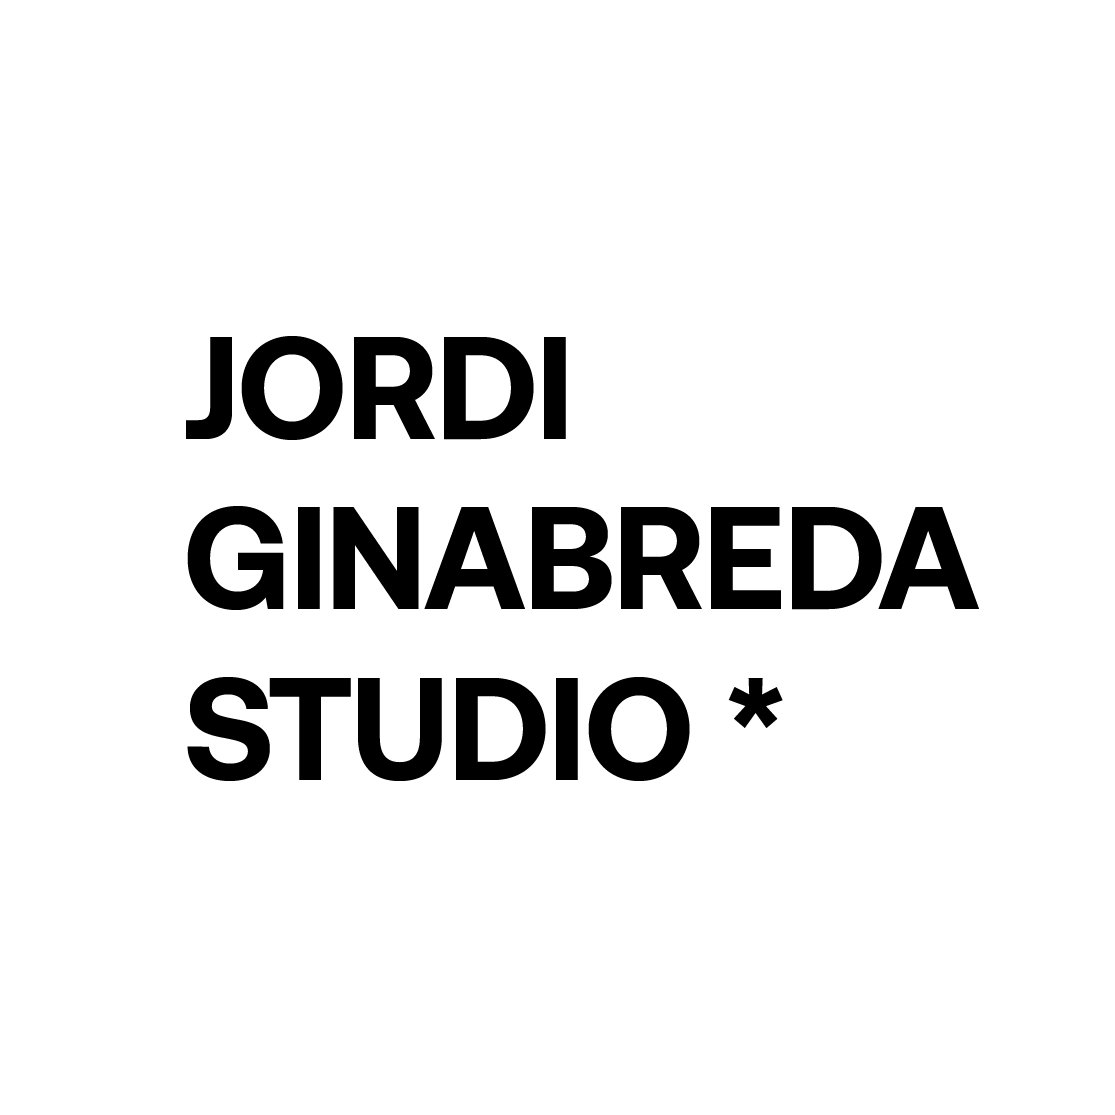 Jordi Ginabreda Studio Logo